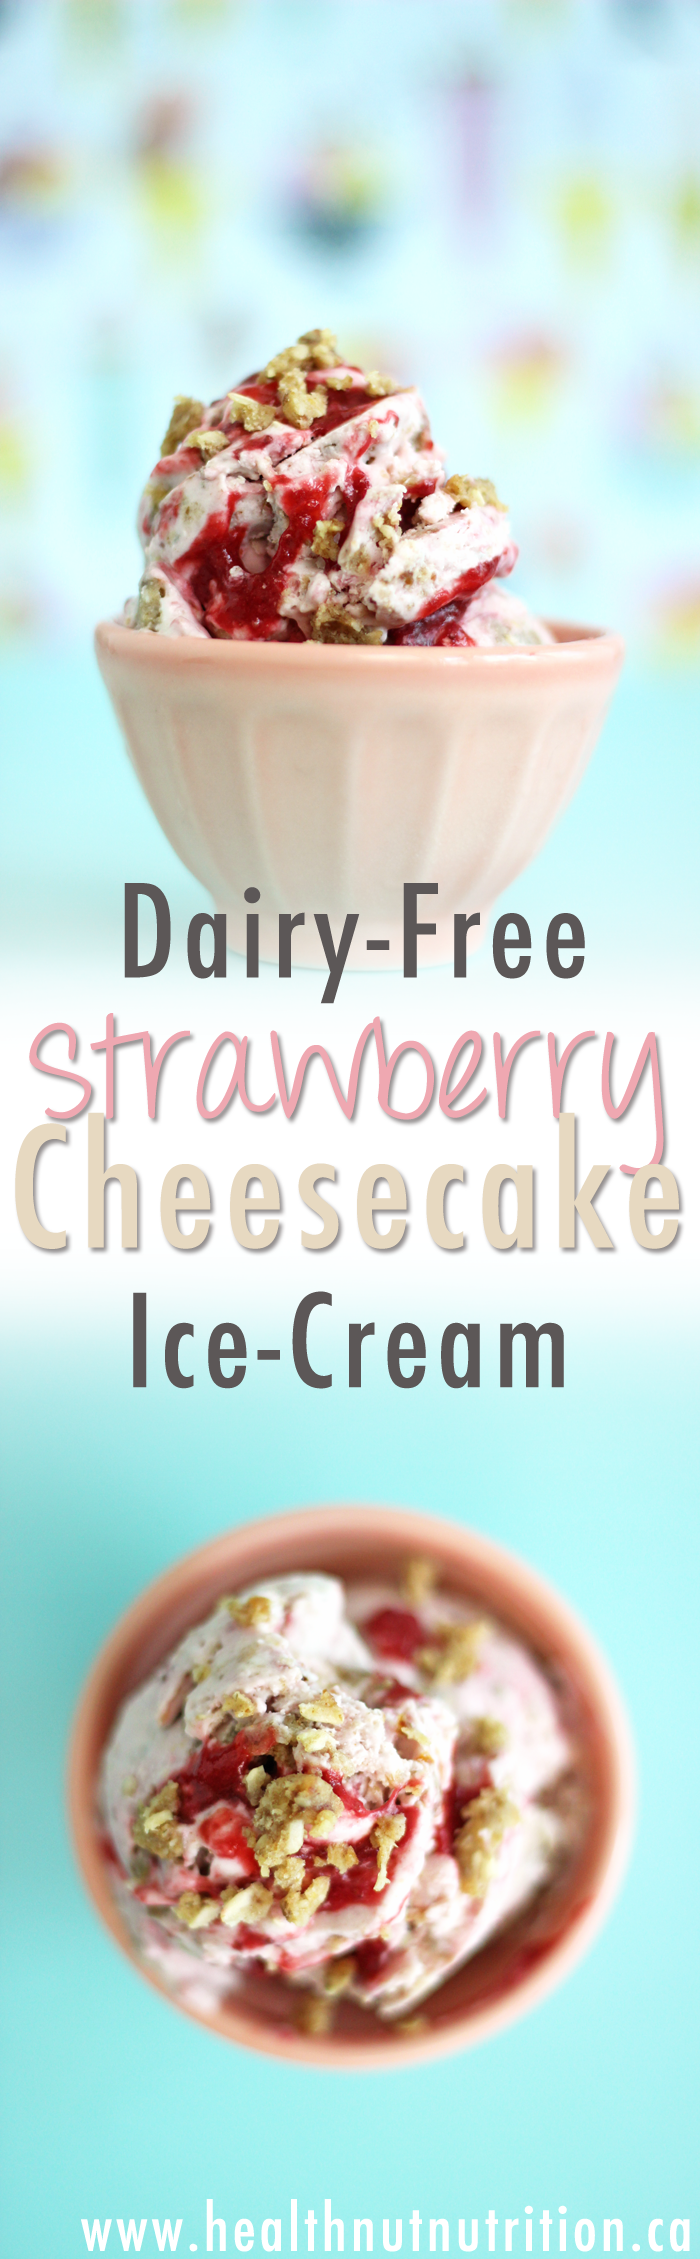 This dairy-free strawberry cheesecake ice-cream combines fresh strawberry puree and graham cracker crumbs all swirled into a heavenly dessert.